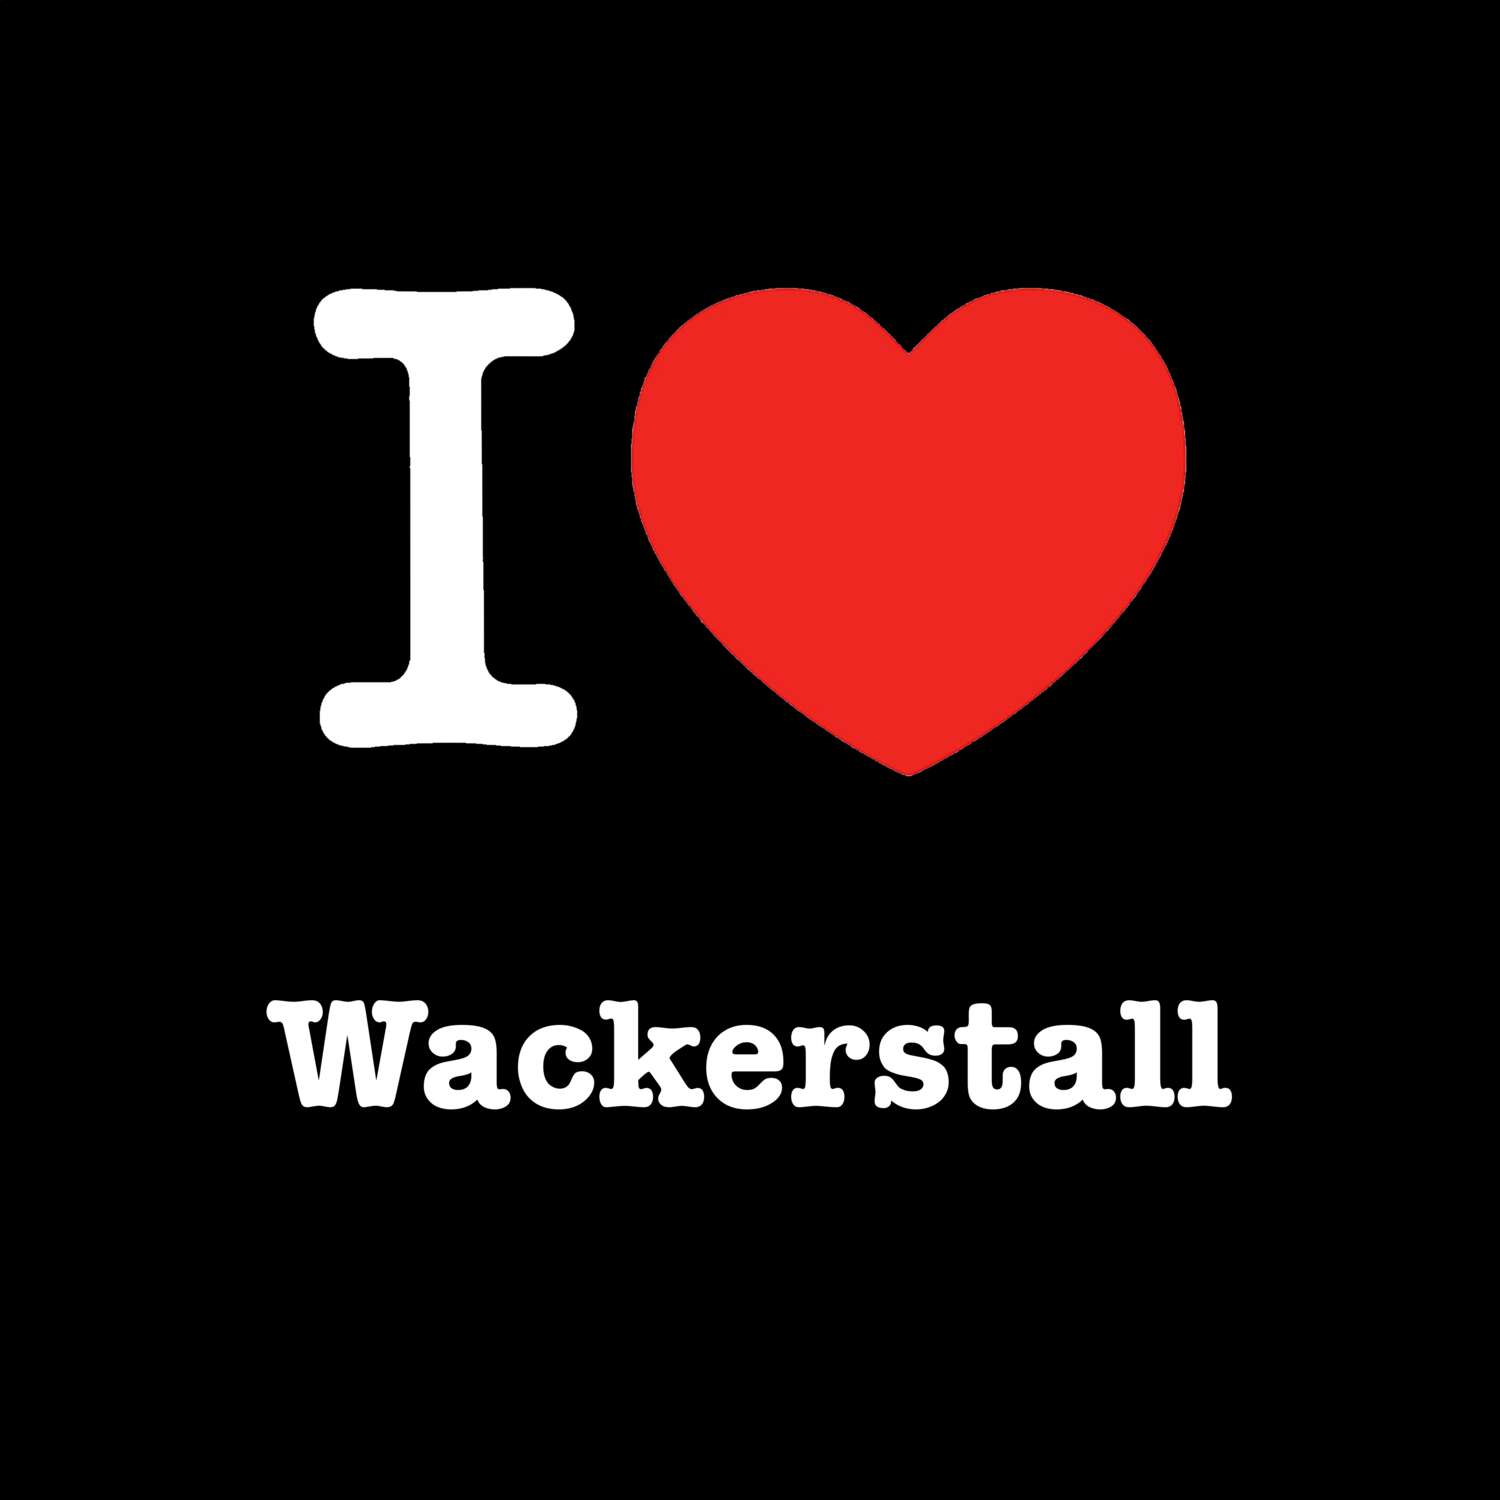 Wackerstall T-Shirt »I love«